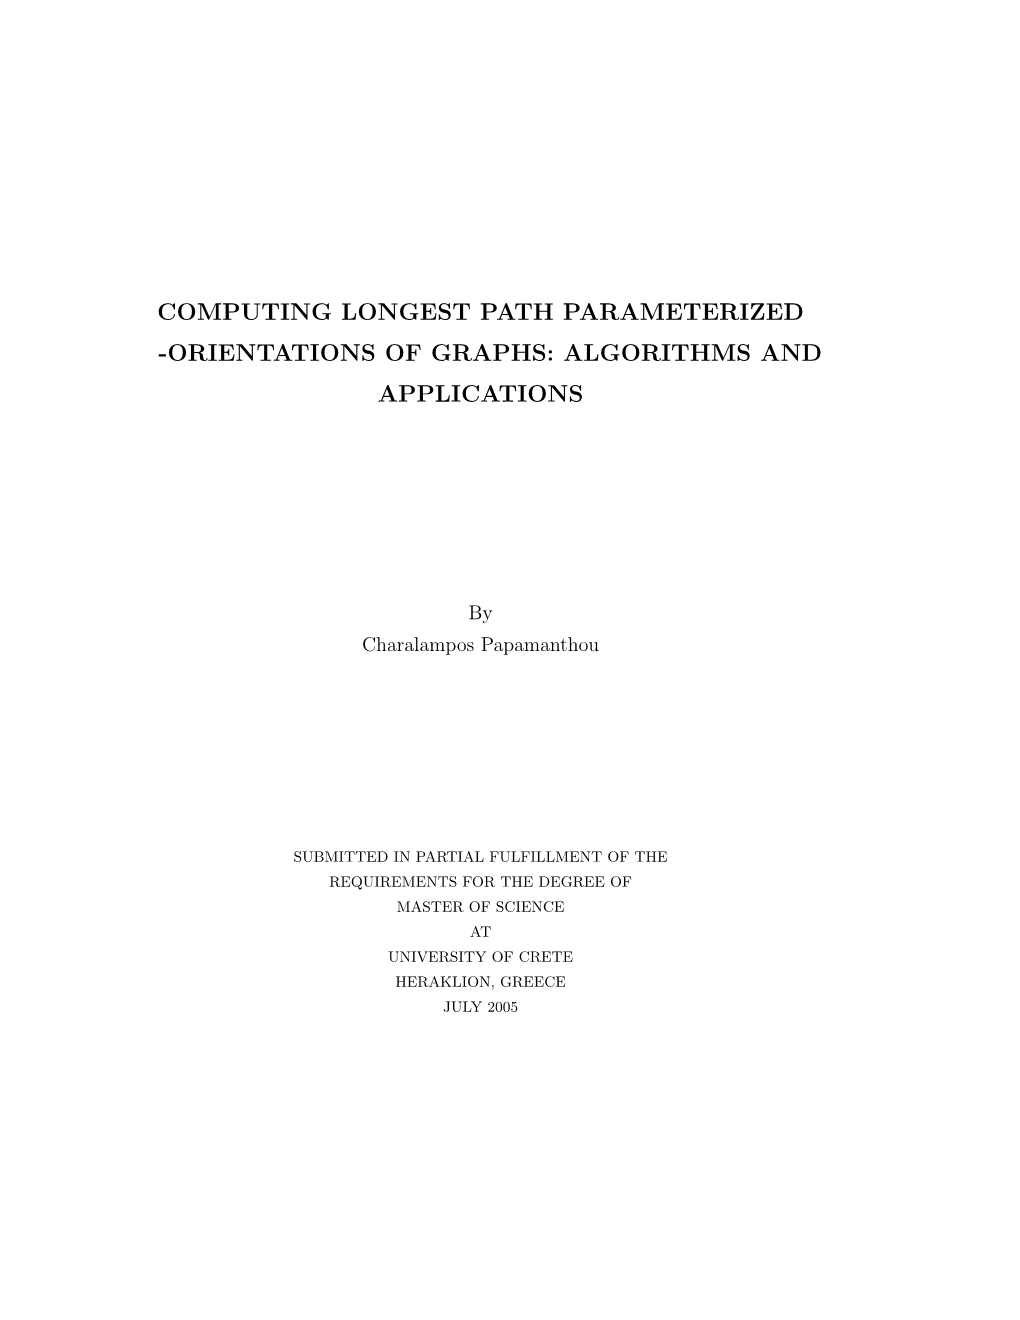 COMPUTING LONGEST PATH PARAMETERIZED St-ORIENTATIONS of GRAPHS: ALGORITHMS and APPLICATIONS